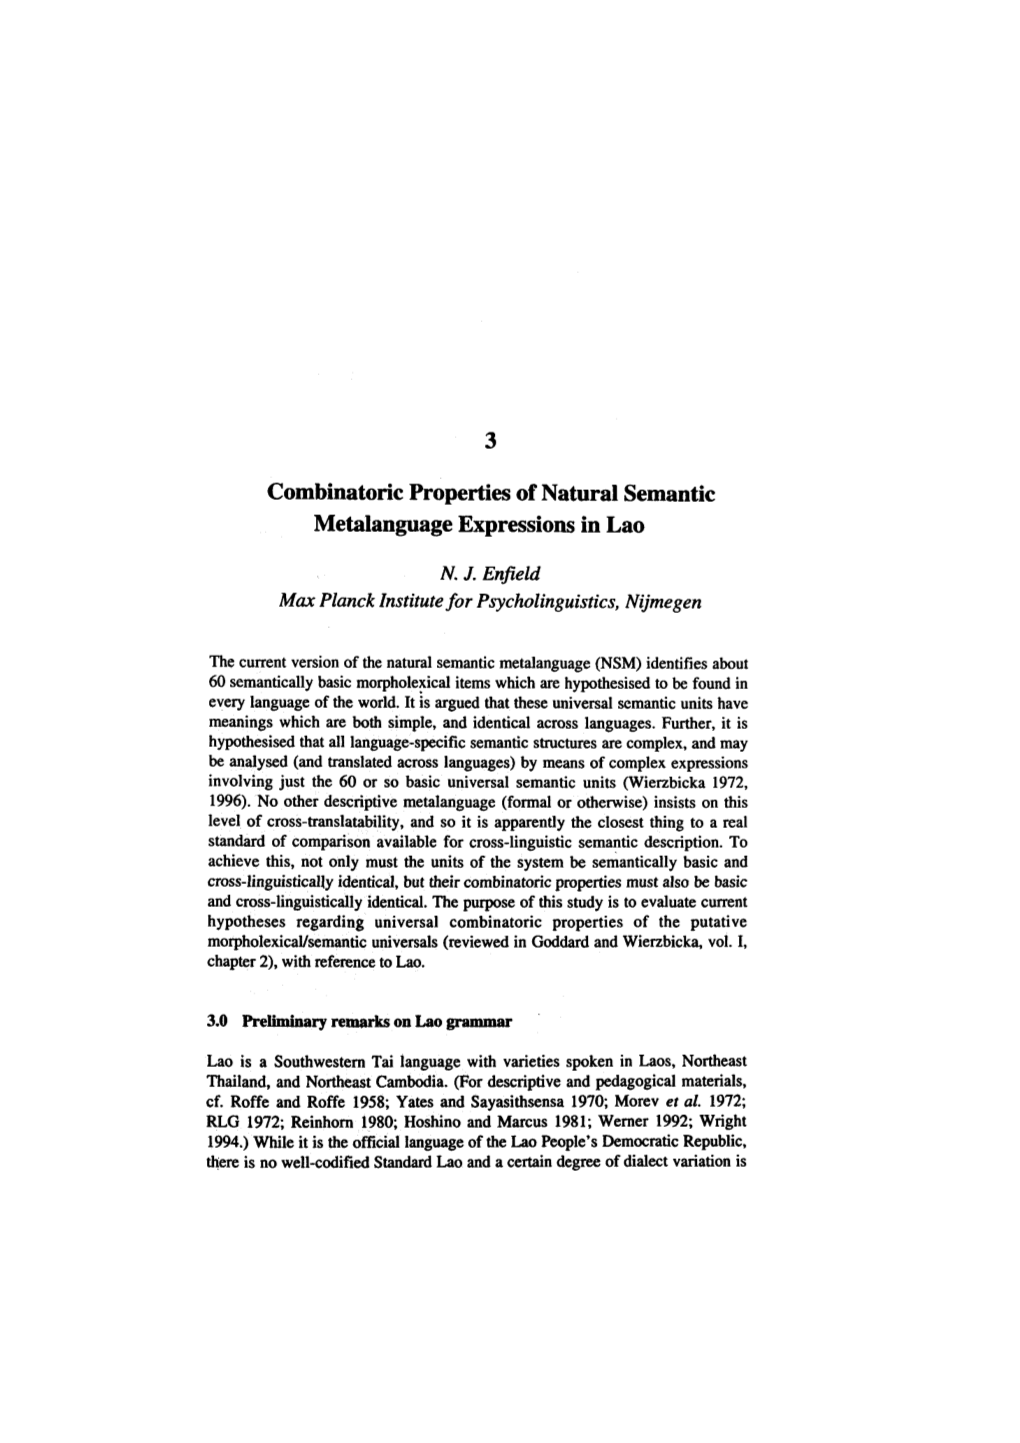 3 Combinatoric Properties of Natural Semantic Metalanguage